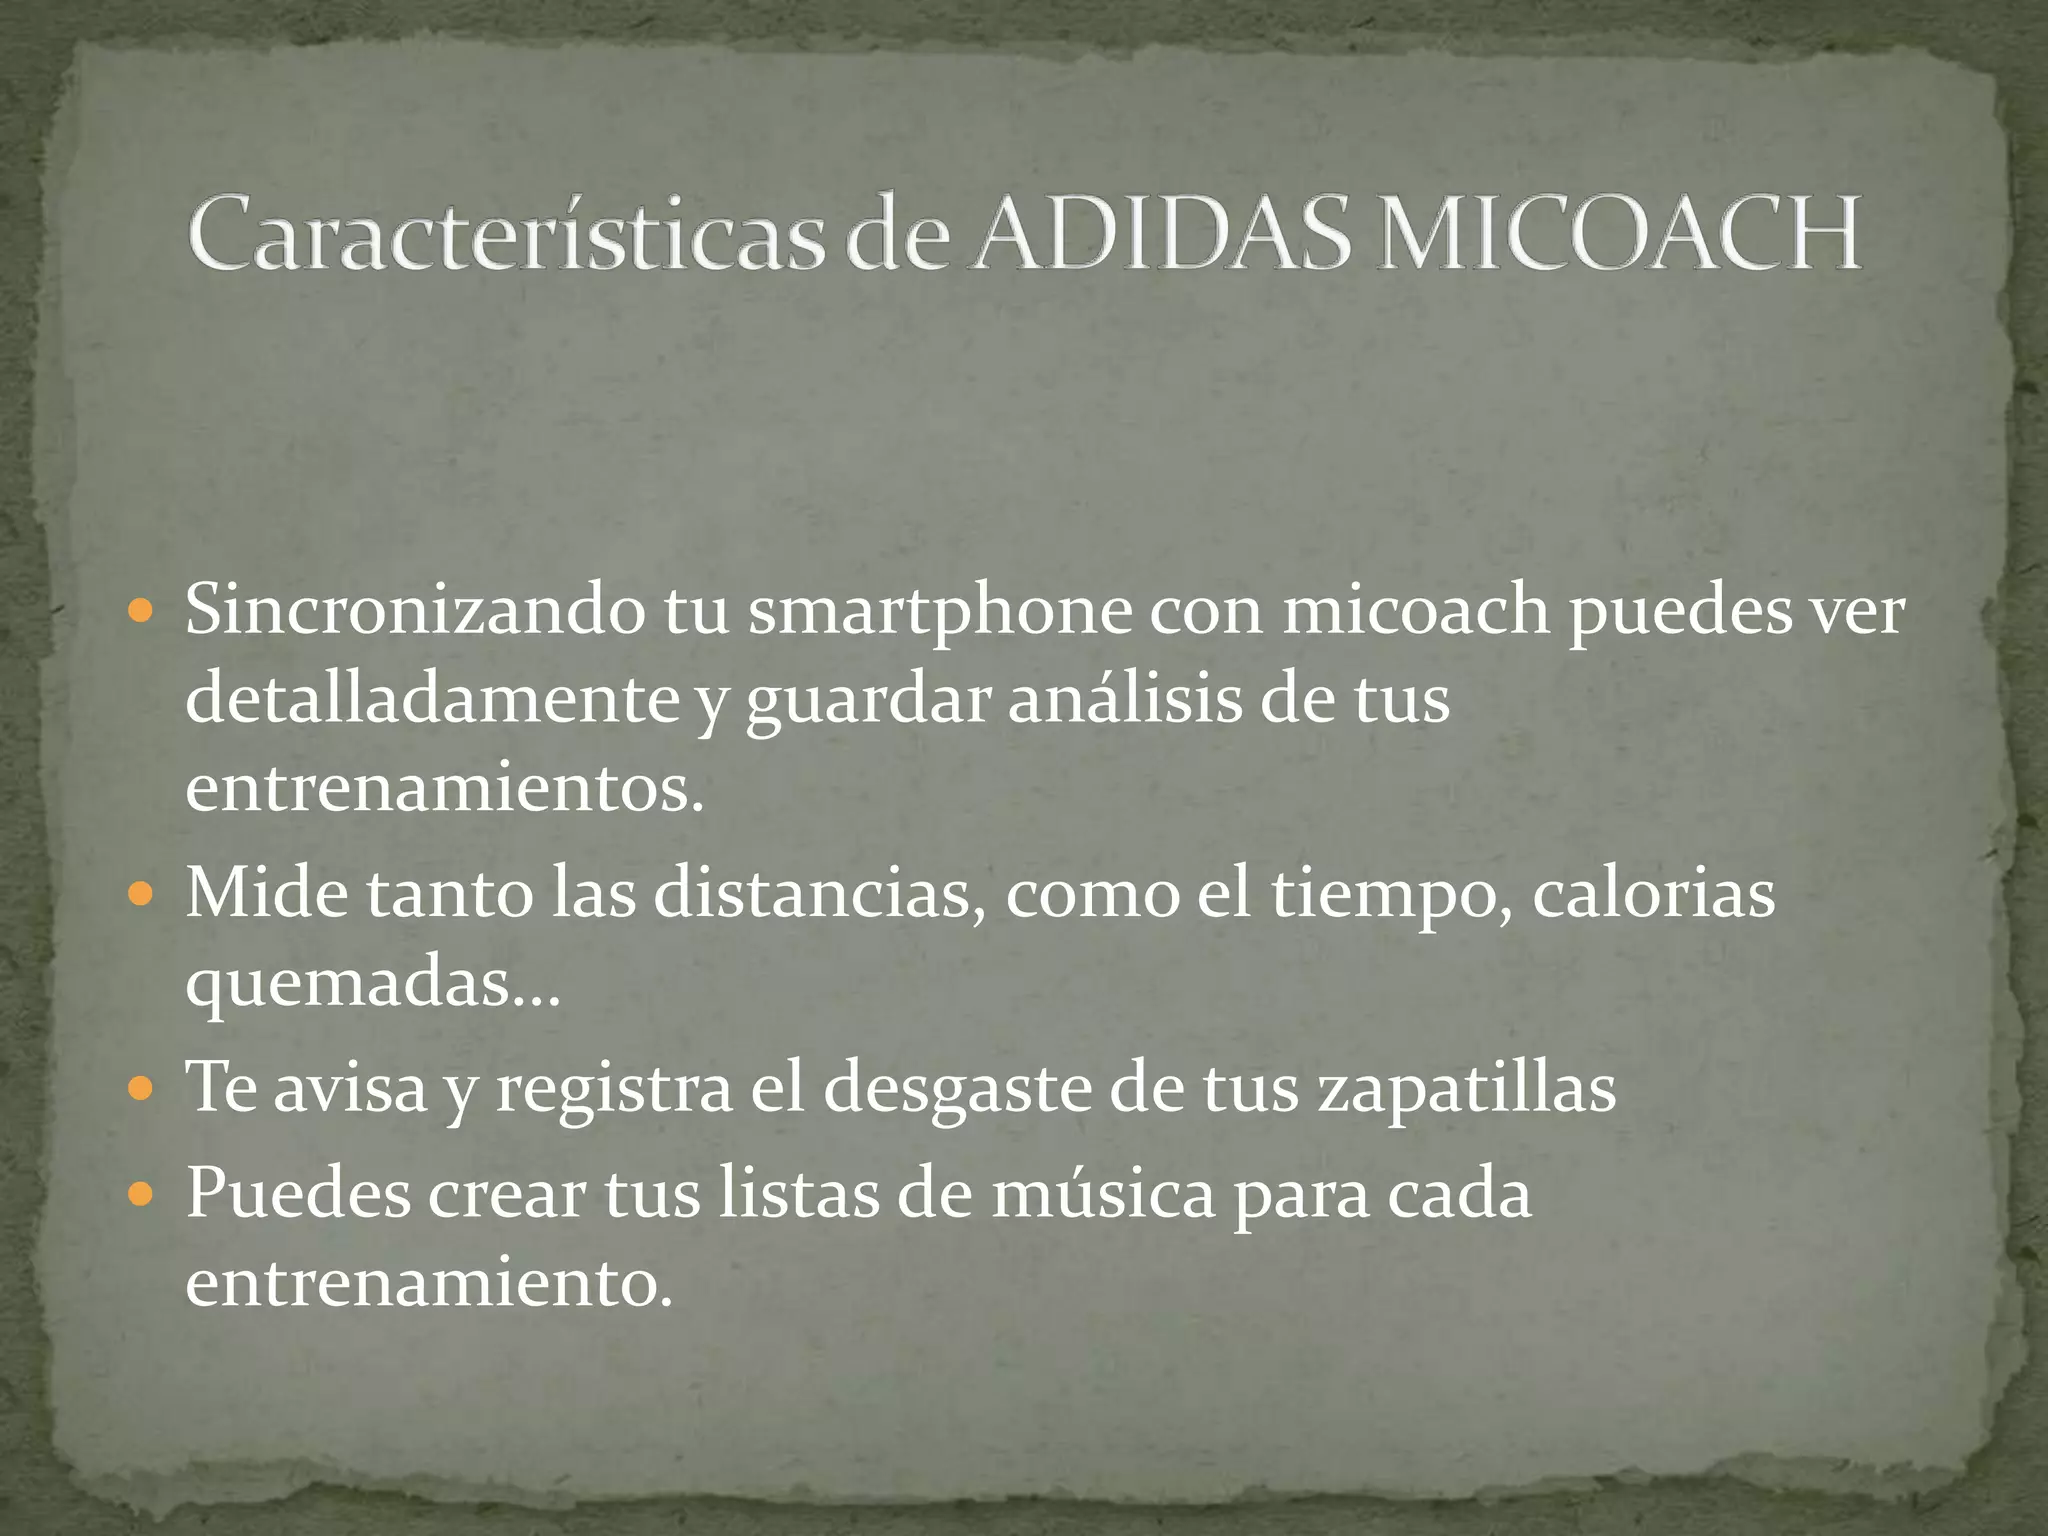 Adidas micoach for